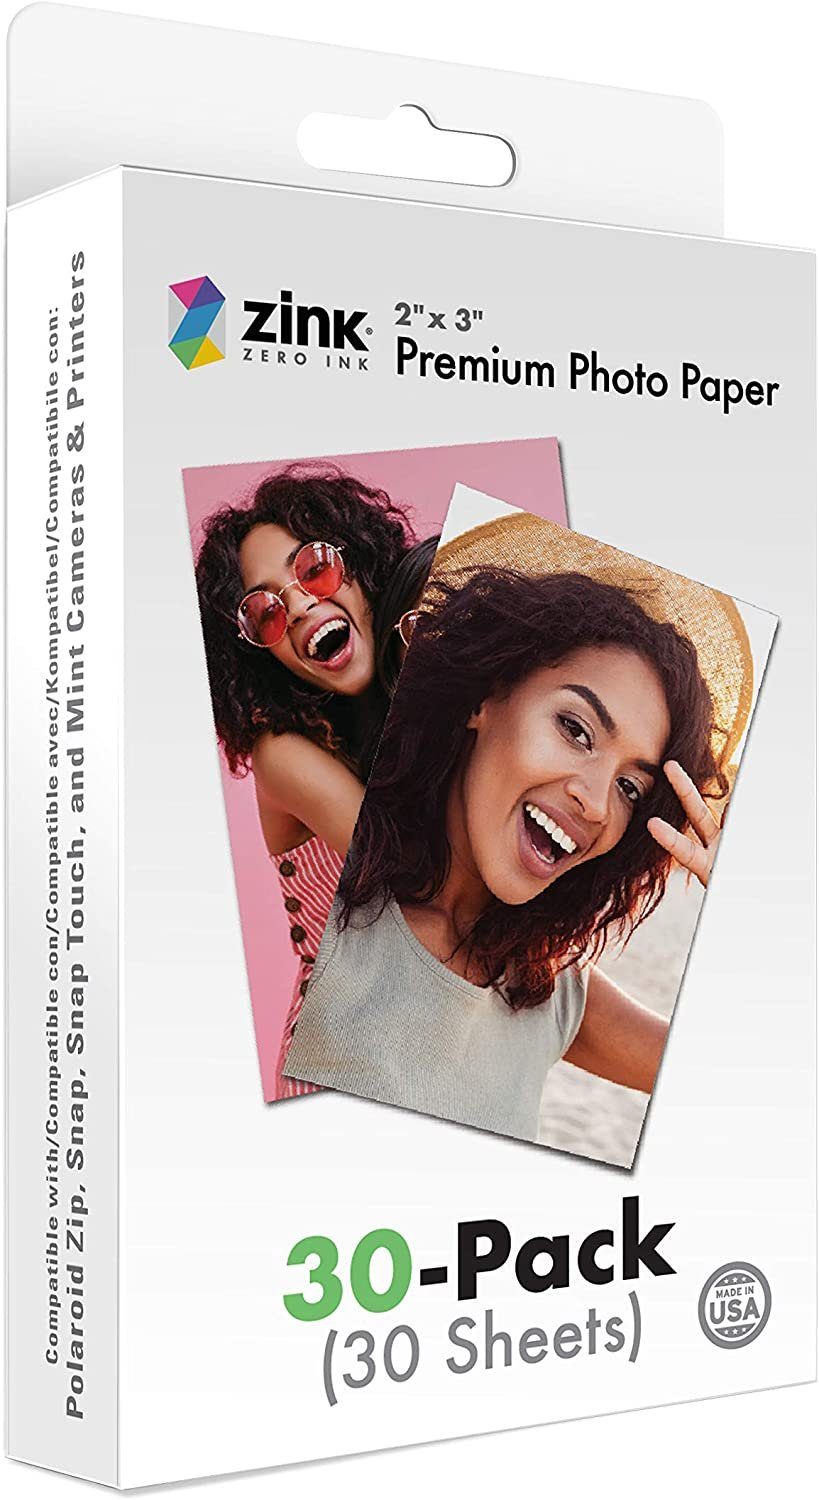 Zink Fotopapier 2x3" Premium Foto Papier (30 Pack), kompatibel mit Polaroid Snap, Snap Touch, Zip